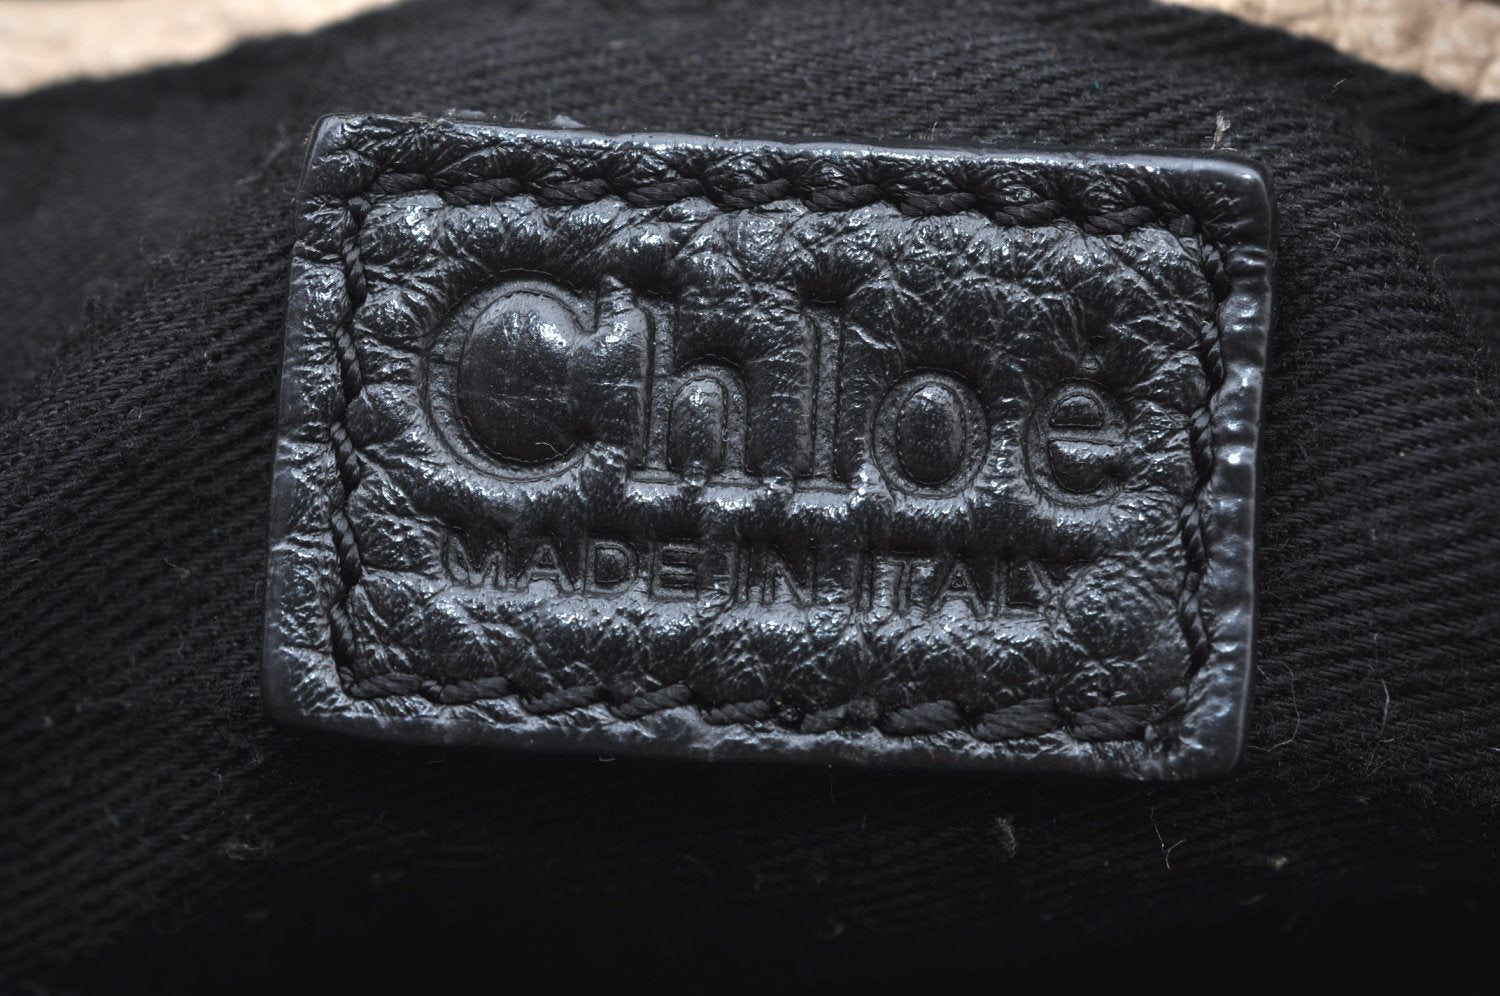 Authentic Chloe Paraty 2Way Shoulder Cross Body Hand Bag Leather Black J8442